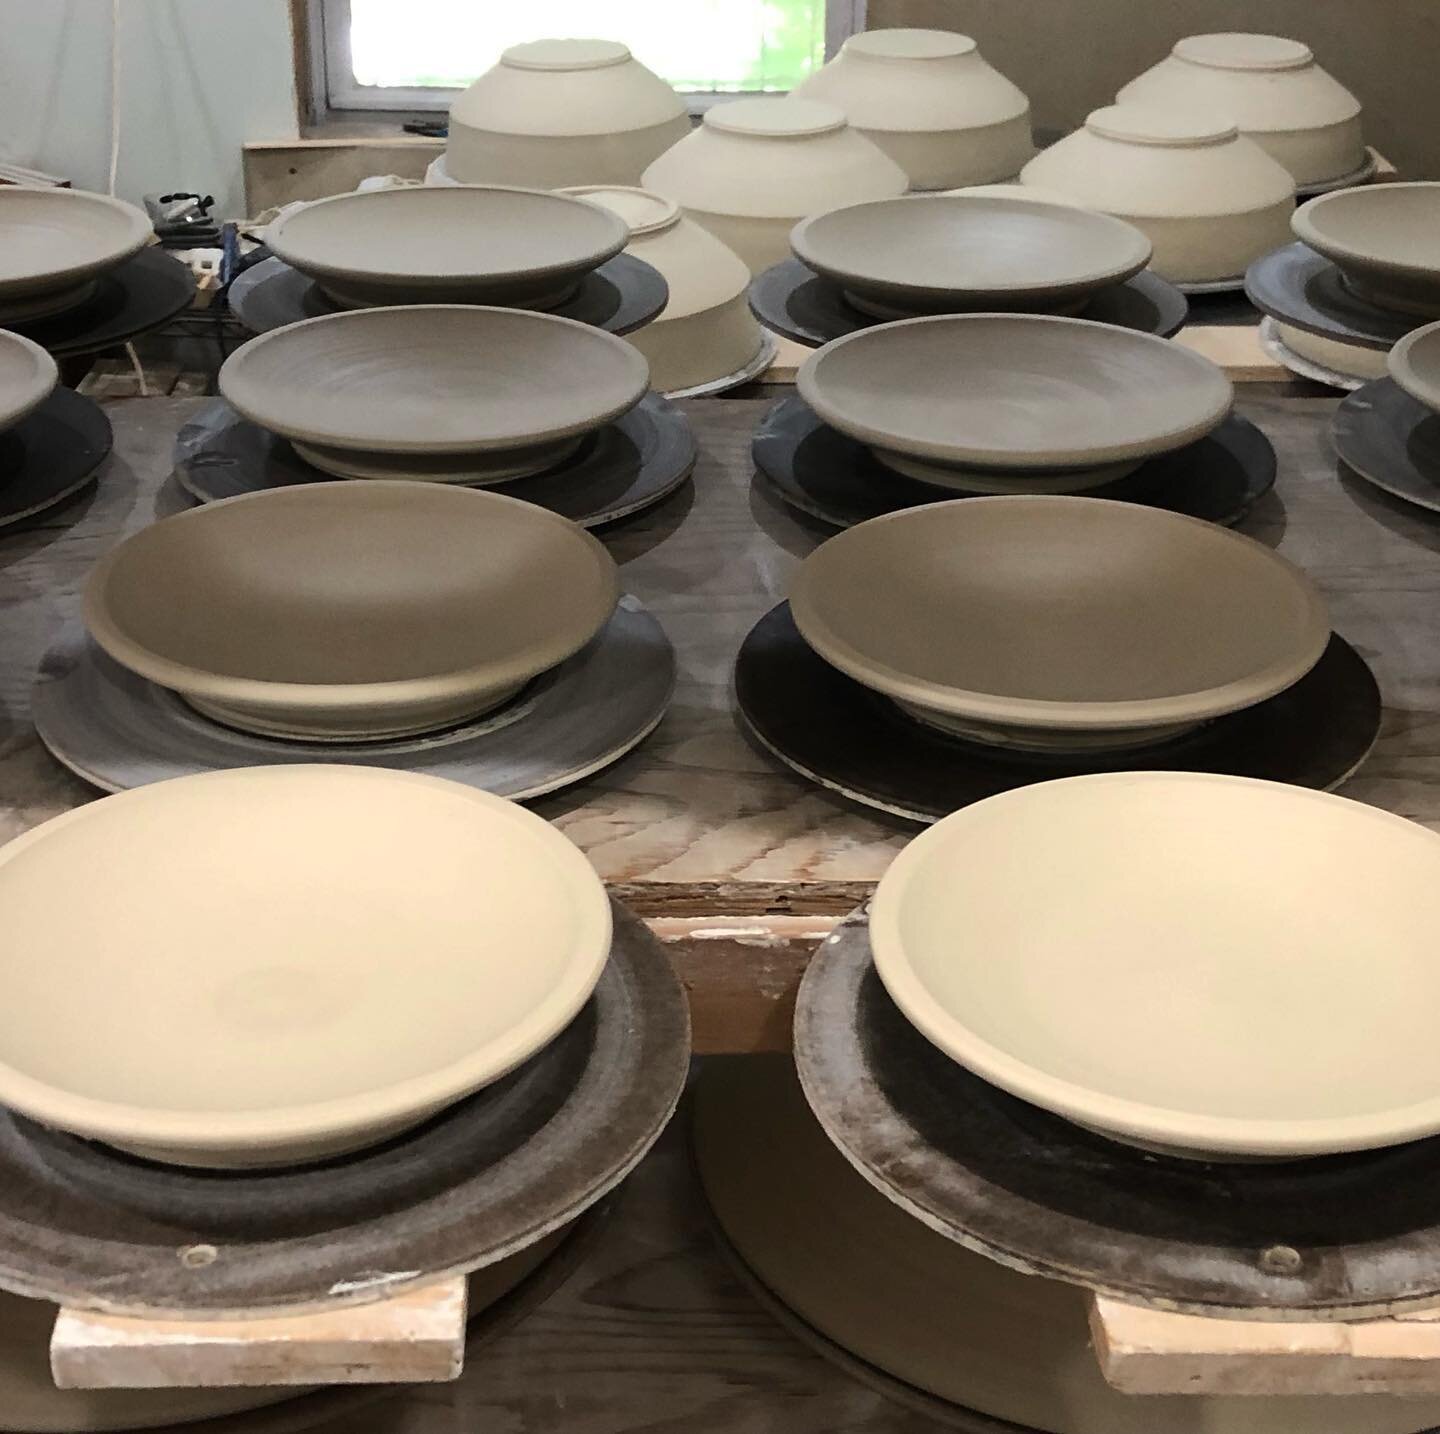 Plates/Bowls in progress. 
&bull;
https://www.etsy.com/shop/Ryanjgreenheck
&bull;
https://ryanjgreenheck.com/shop
&bull; 
#wheelthrown #pottery #porcelain #ceramics #ceramic #ceramicstudio #ceramicart #functionalart #decorativeart #handmade #handmade